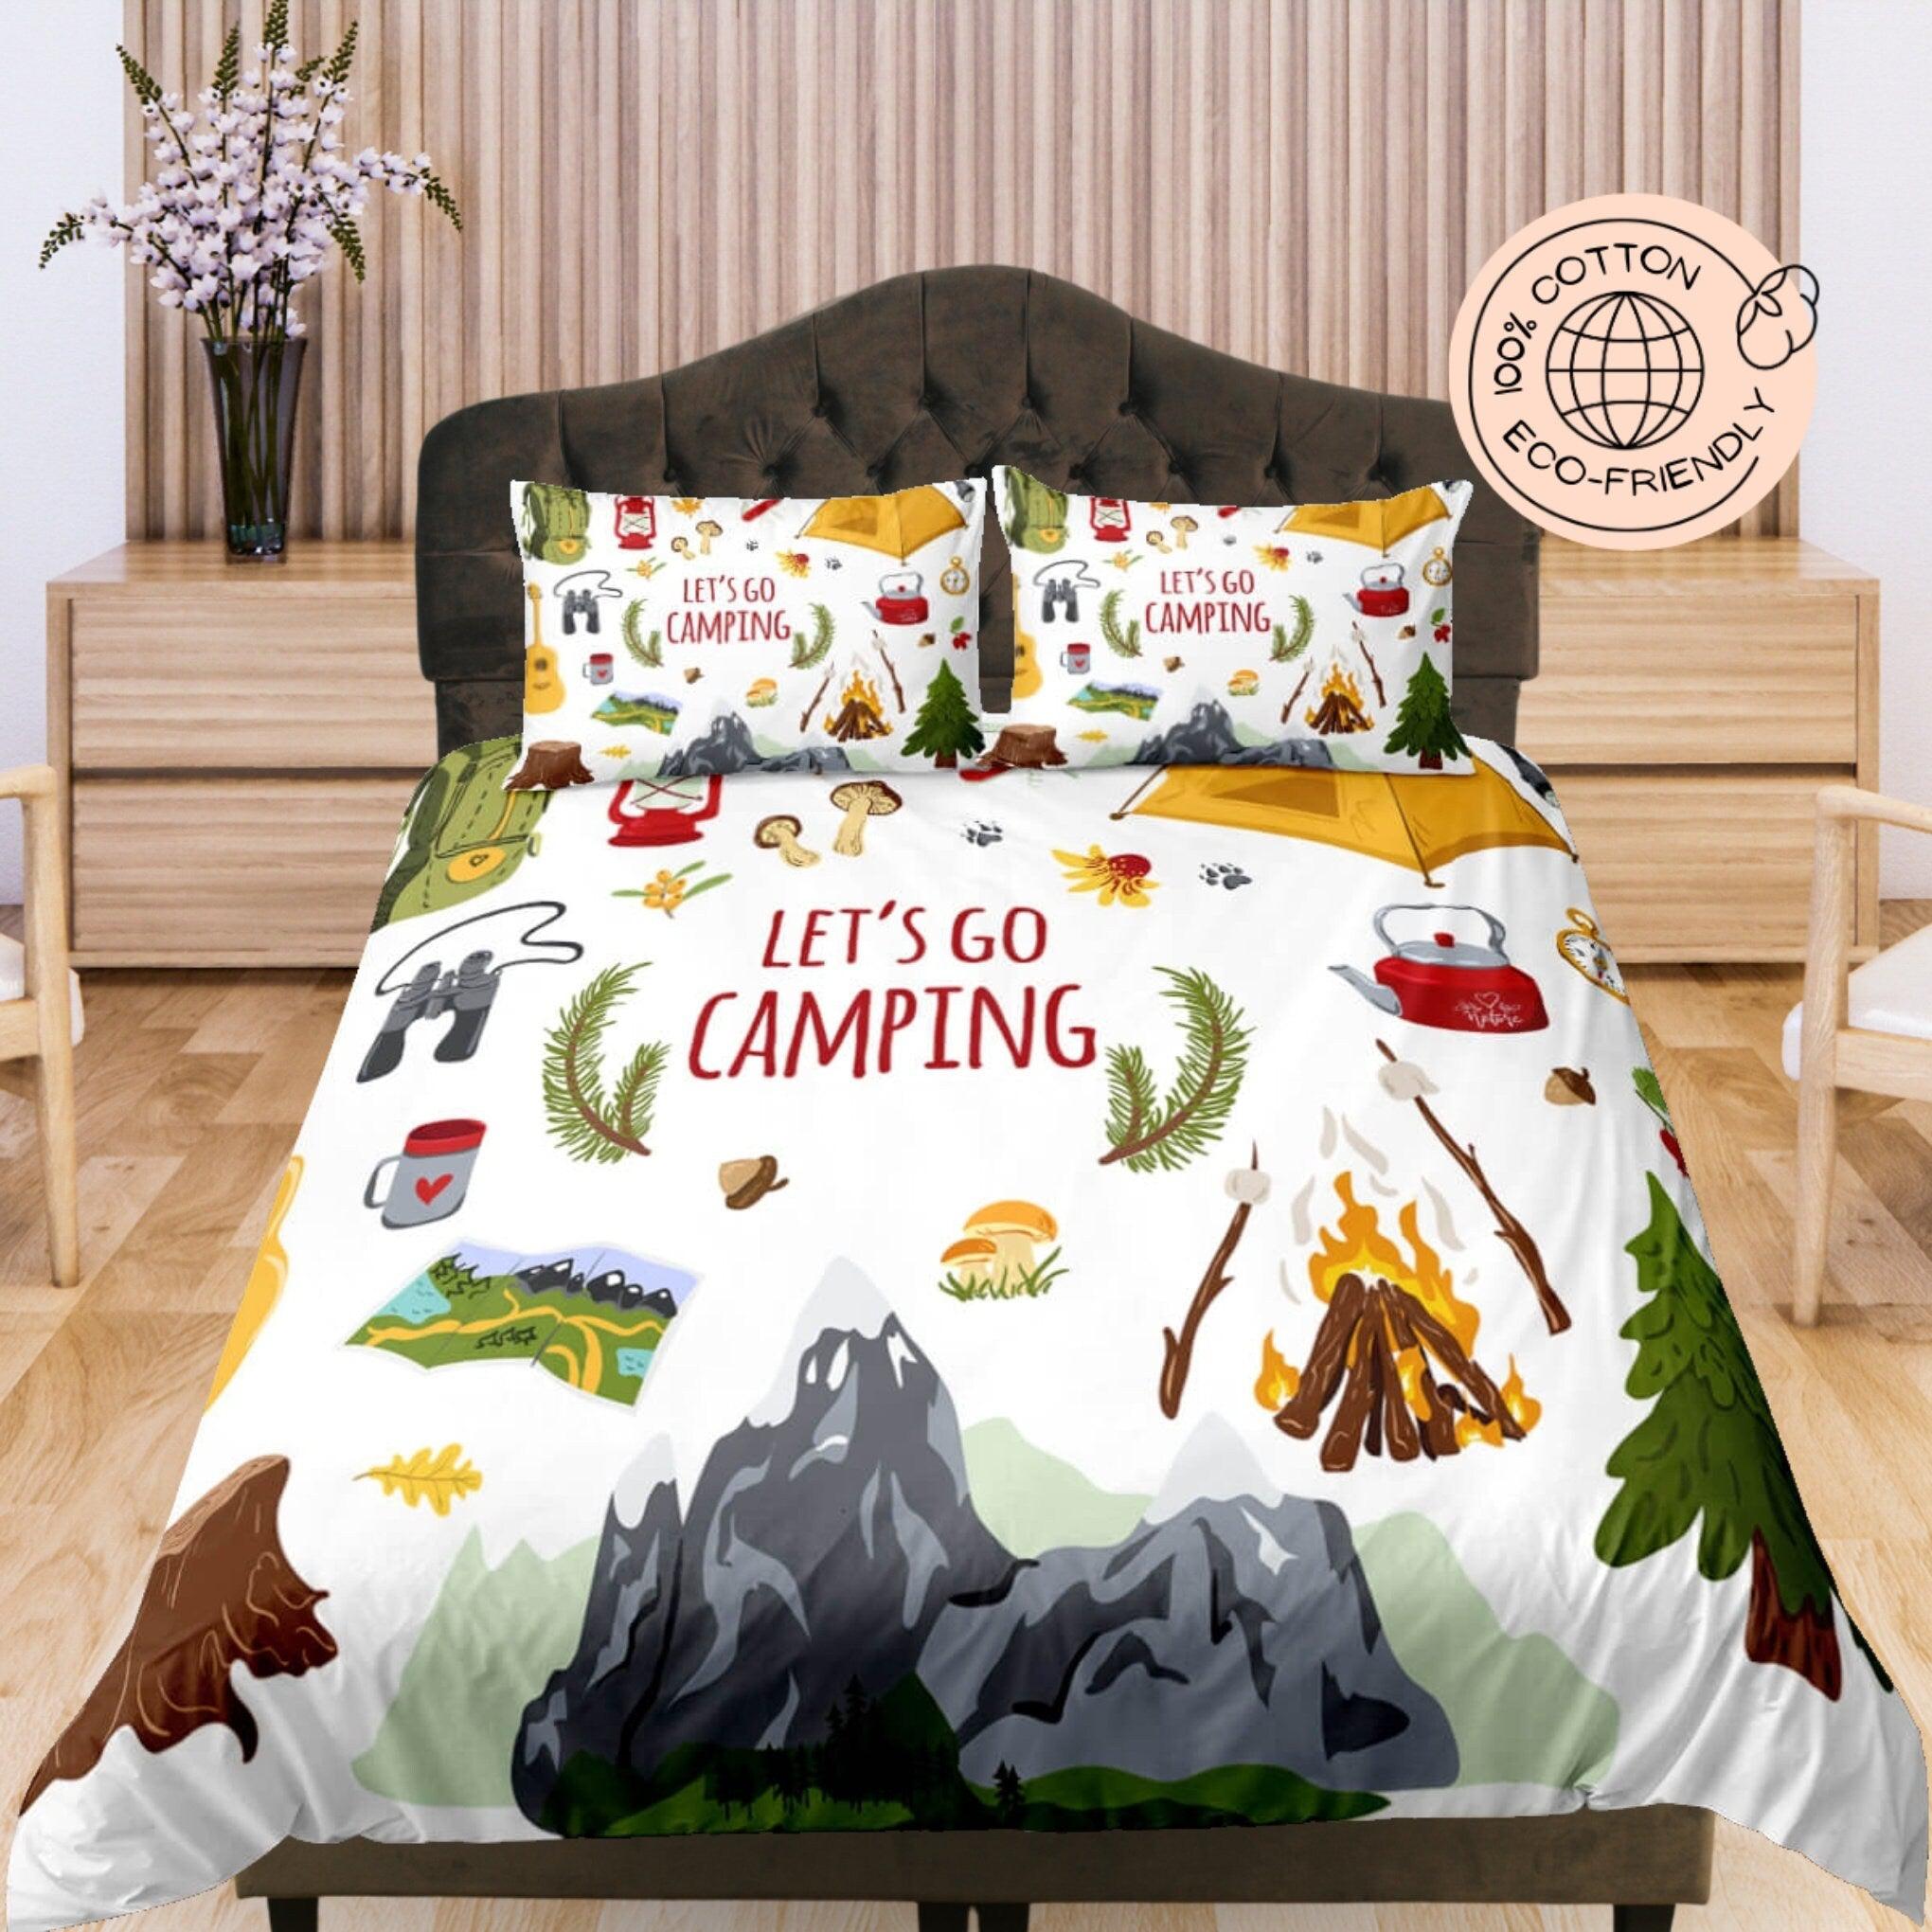 daintyduvet Let's Go Camping, Outdoor Themed Cotton Duvet Cover Set for Kids, Toddler Bedding, Baby Zipper Bedding, Nursery Cotton Bedding, Crib Blanket